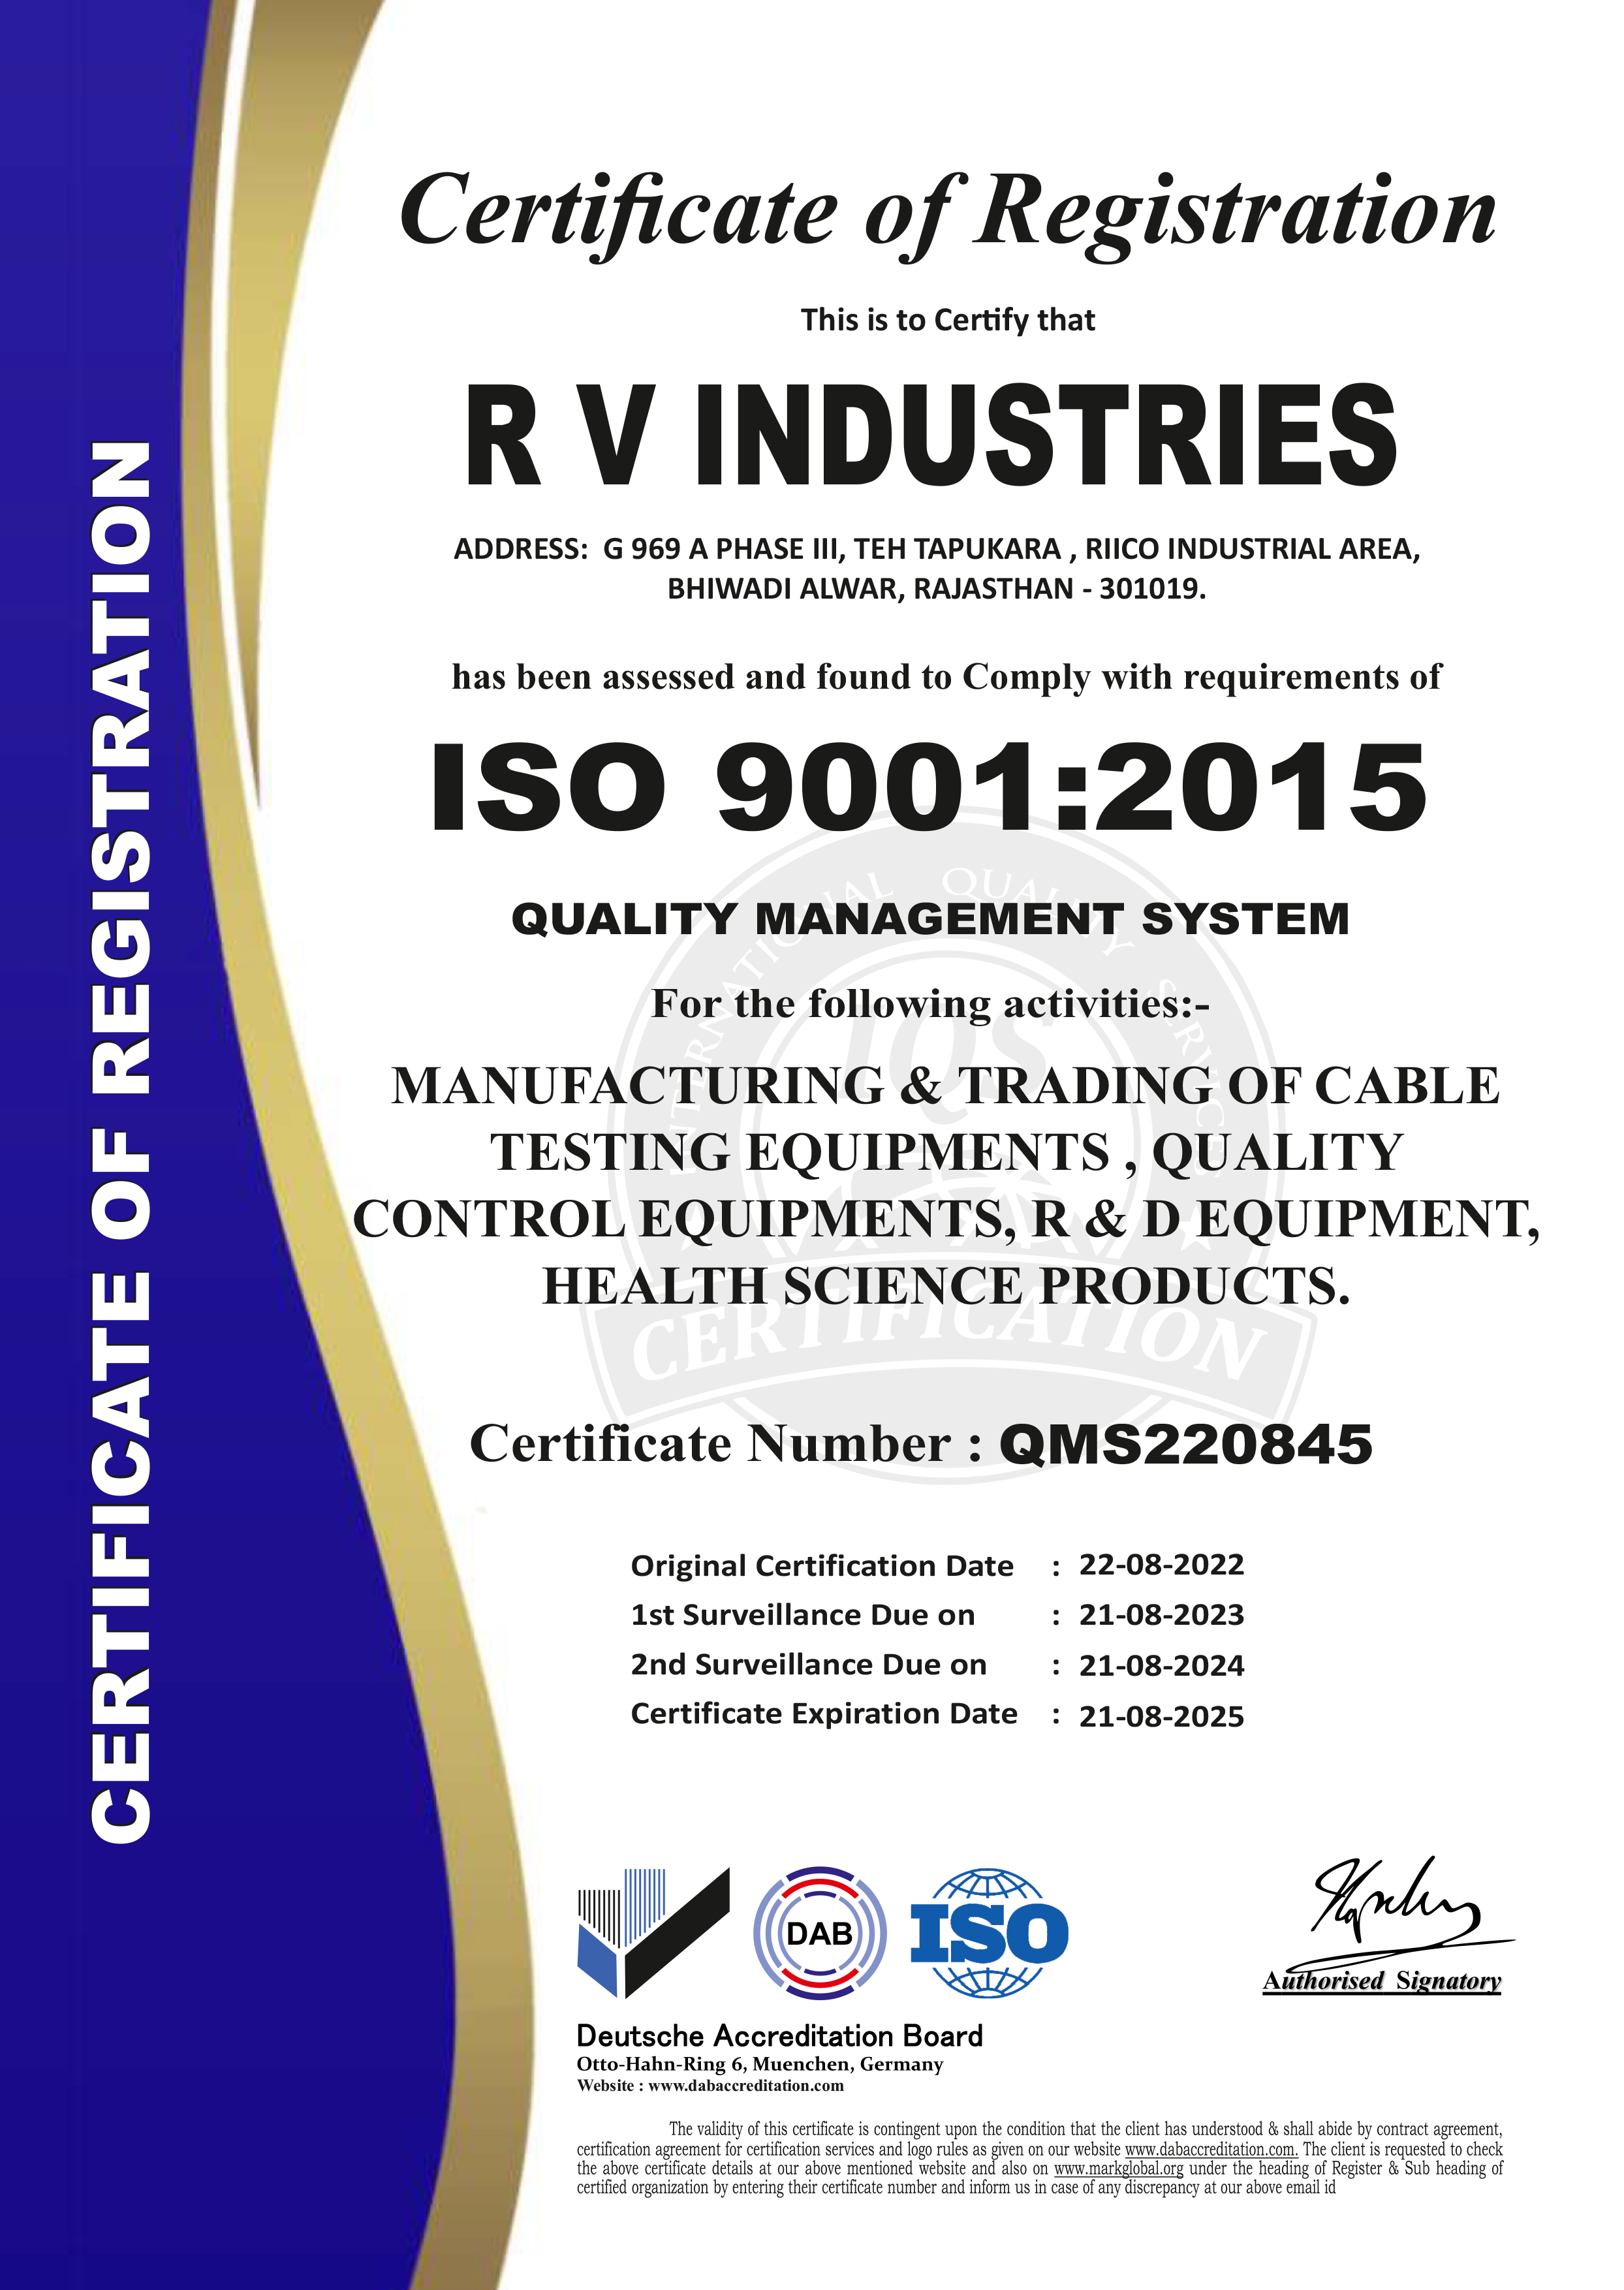 RV Industries Certificates